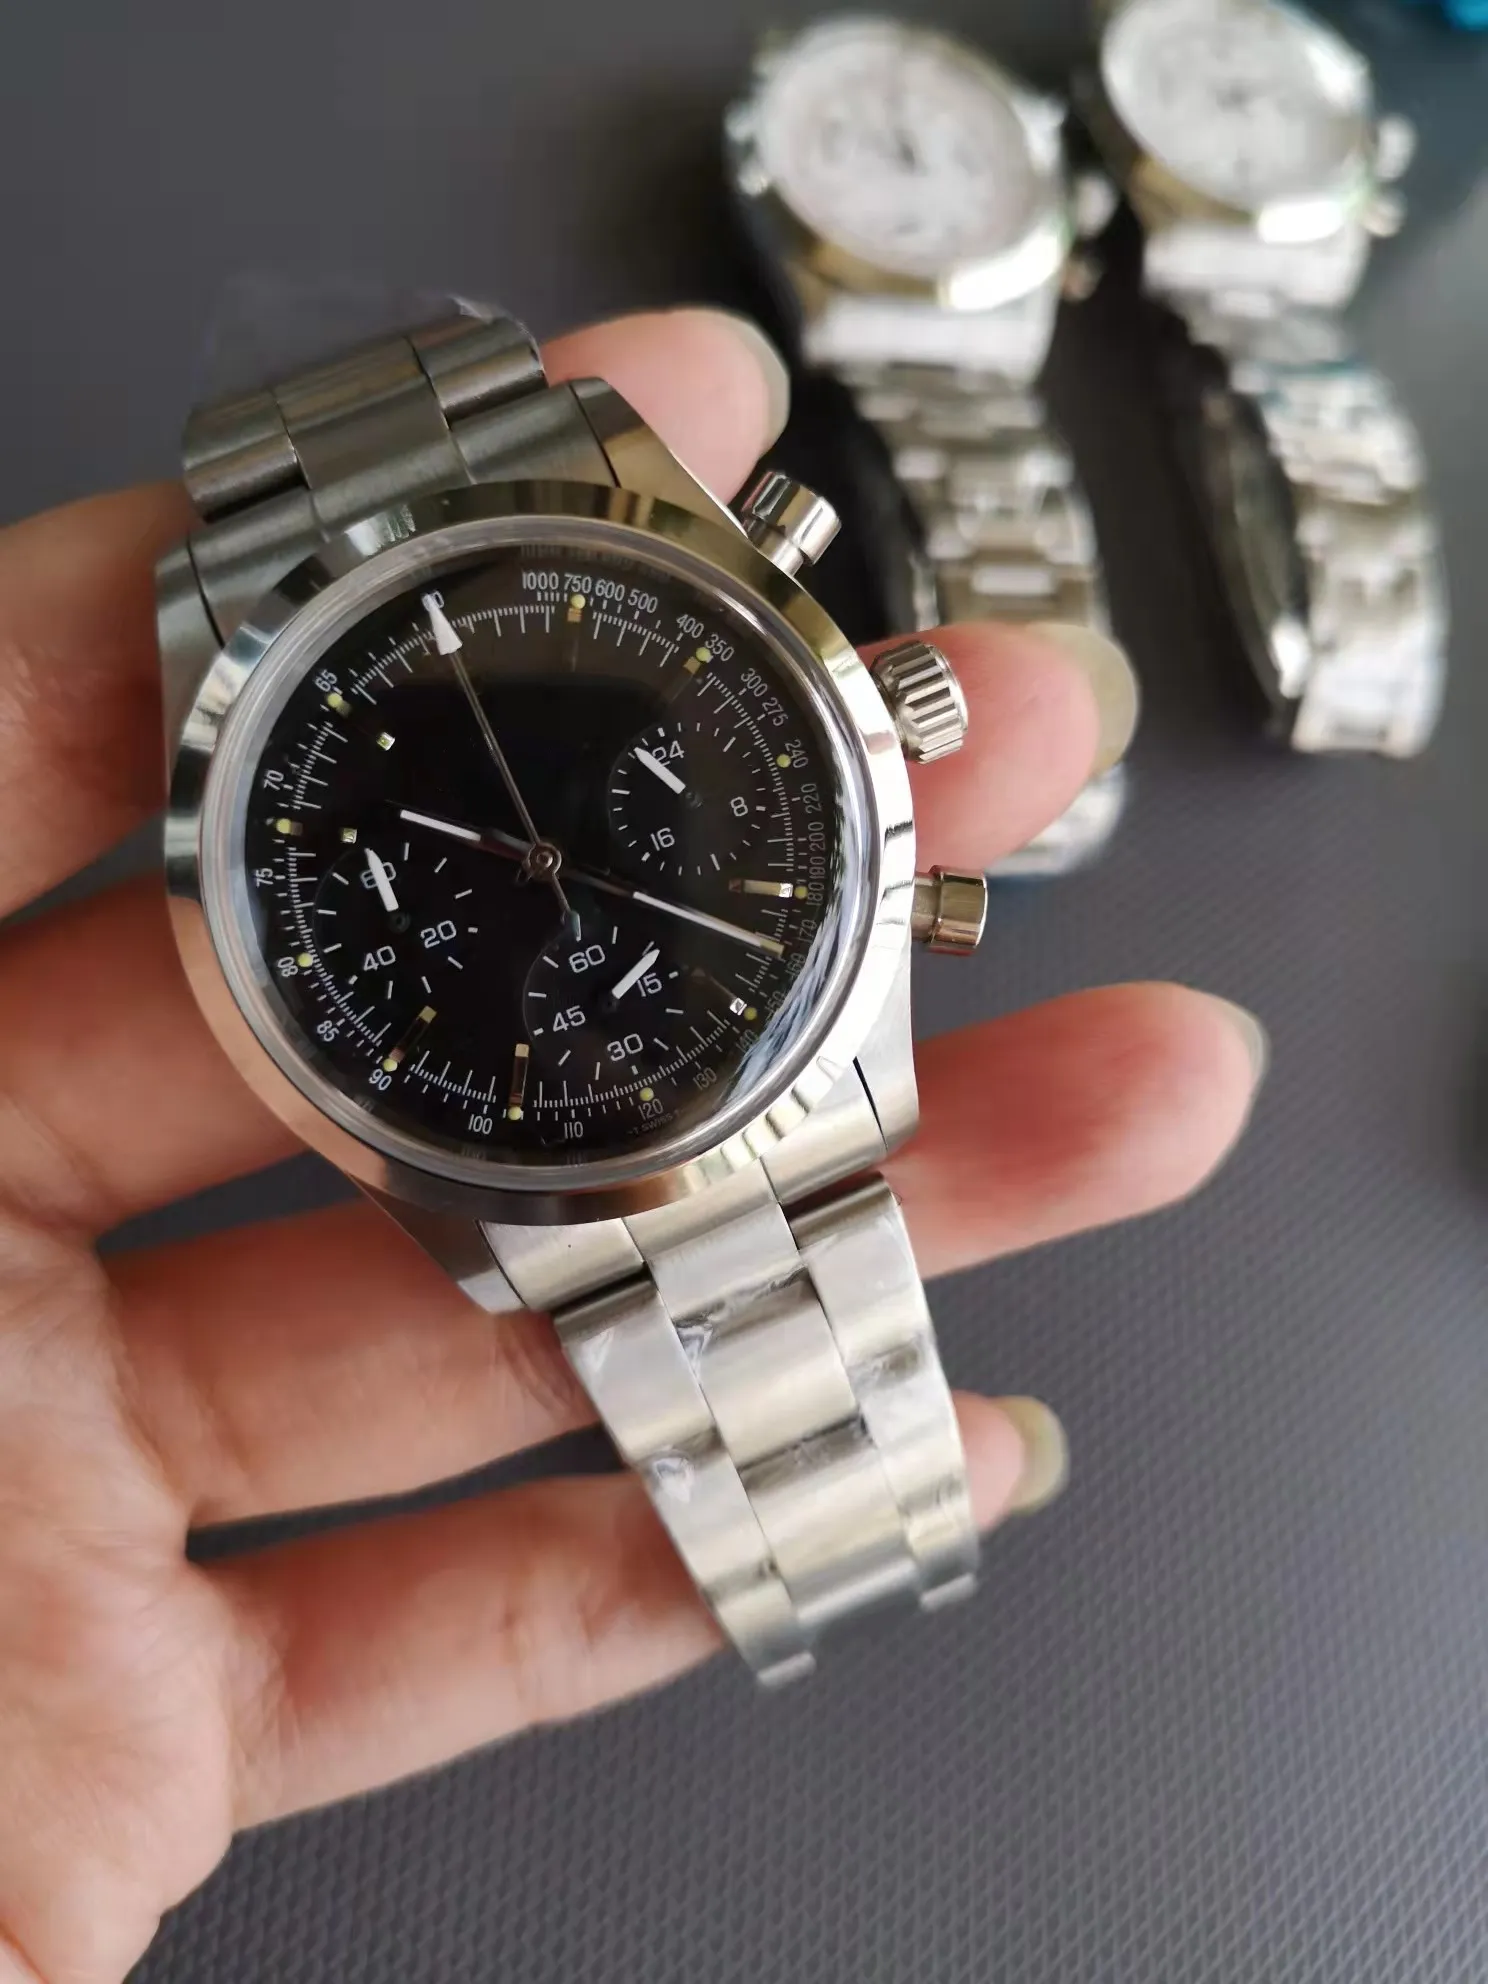 Vintage Uhr Perpetual Paul Newman VK63 Uhrwerk Quarz Stoppuhr Herrenuhr Edelstahl Herrenuhren 37mm Armbanduhren R862542